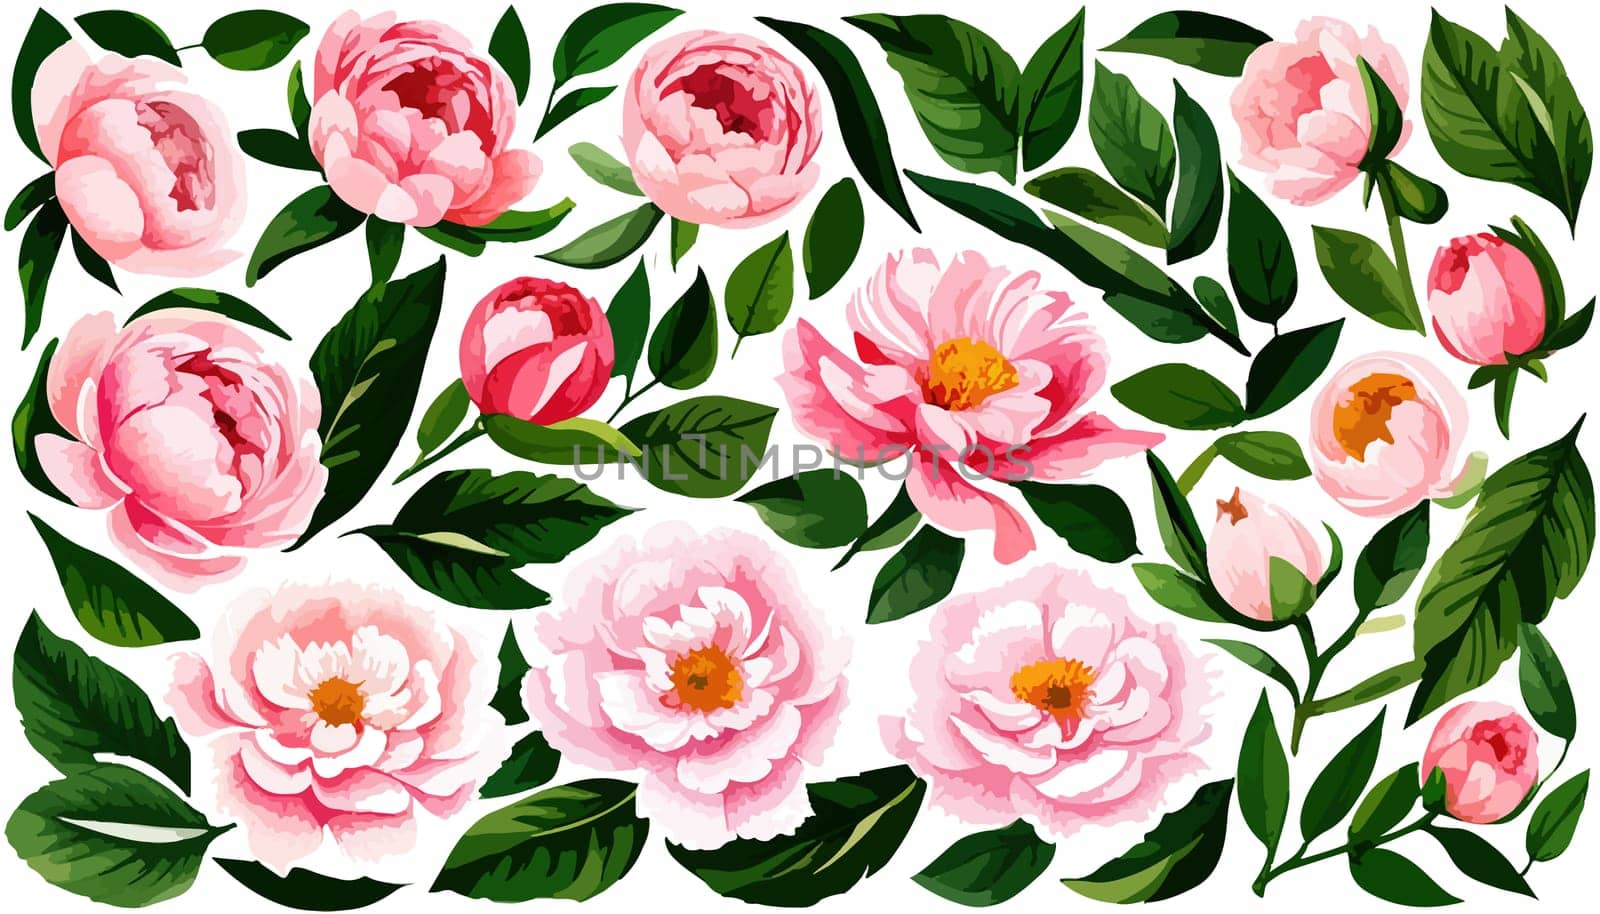 Painted floral elements set. Watercolor botanical illustration of peony flowers by EkaterinaPereslavtseva